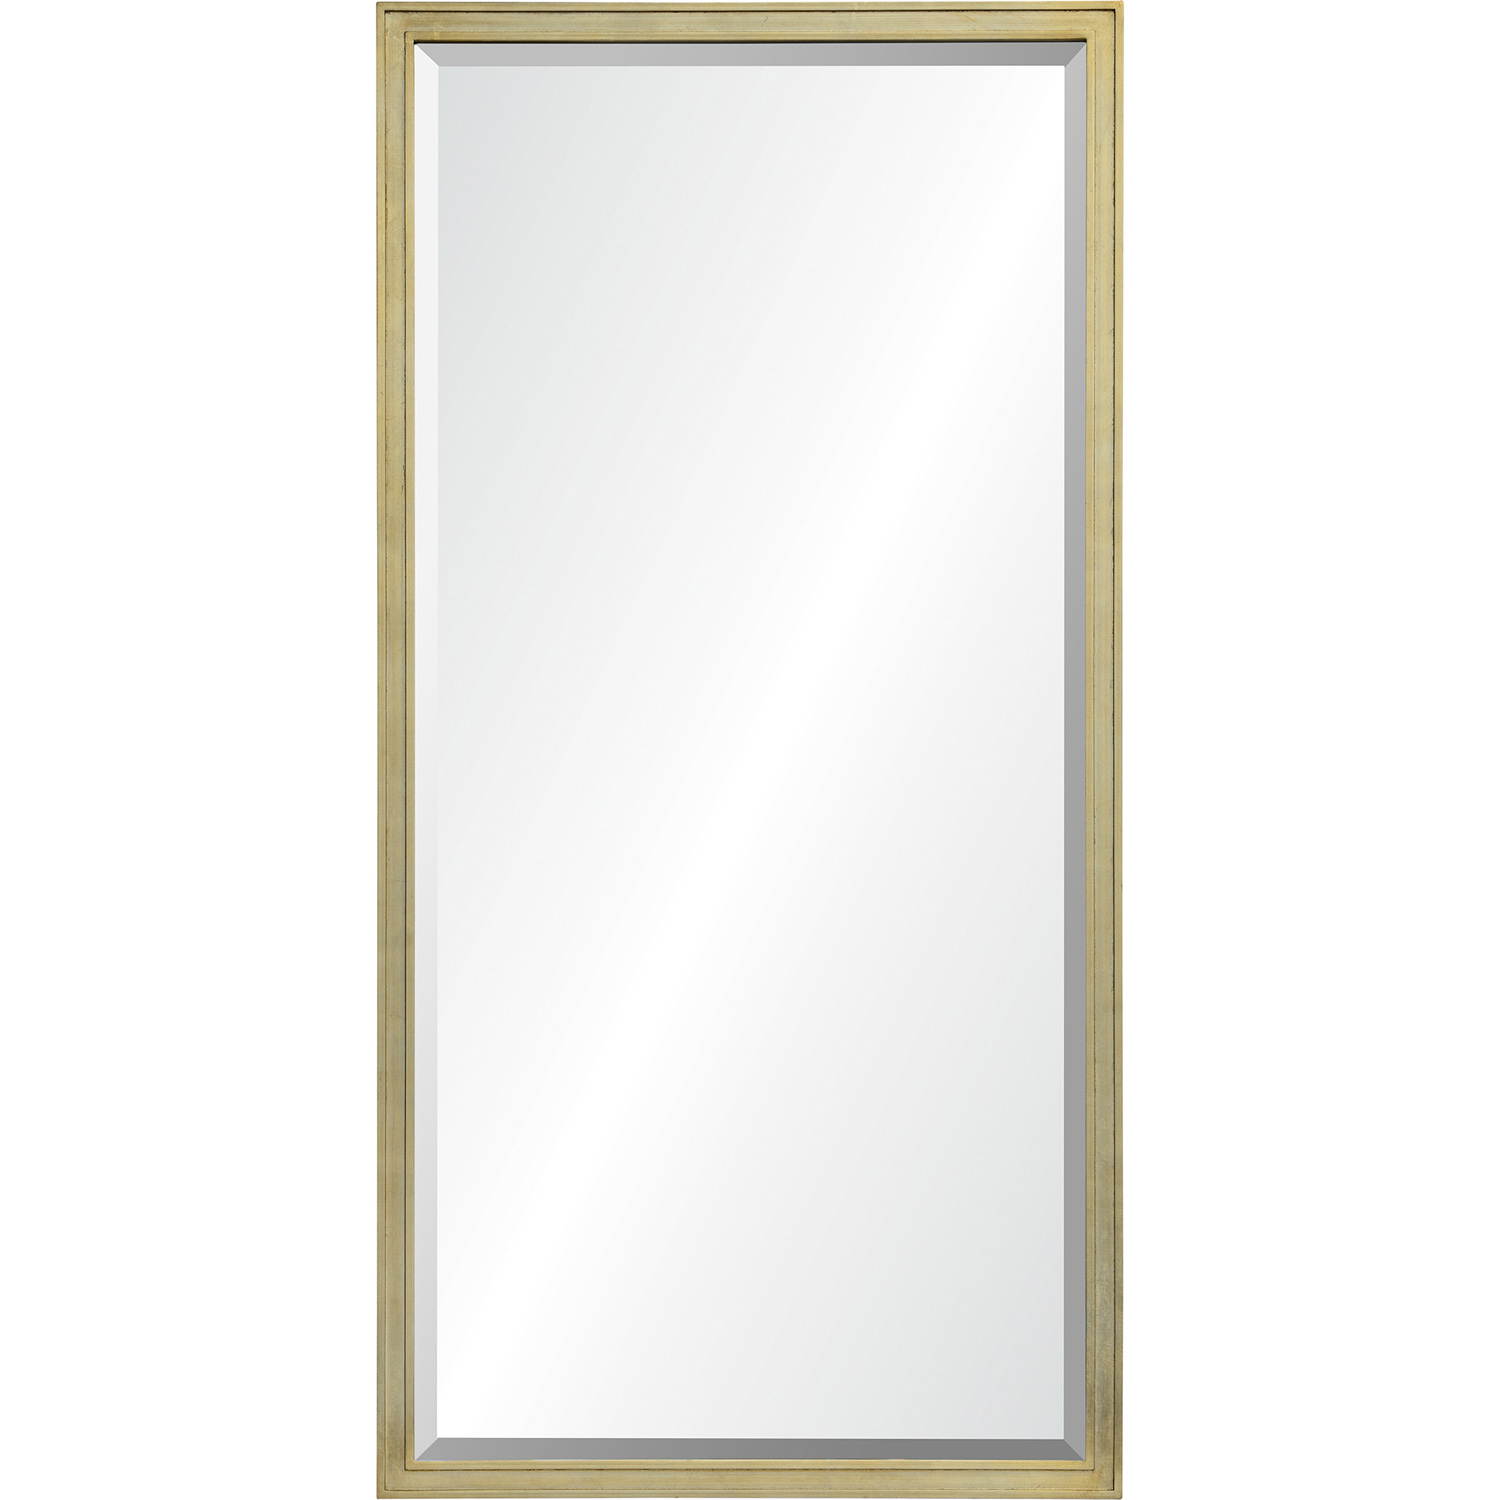 Ren-Wil Barwell Rectangle Mirror - Light Gold Leaf